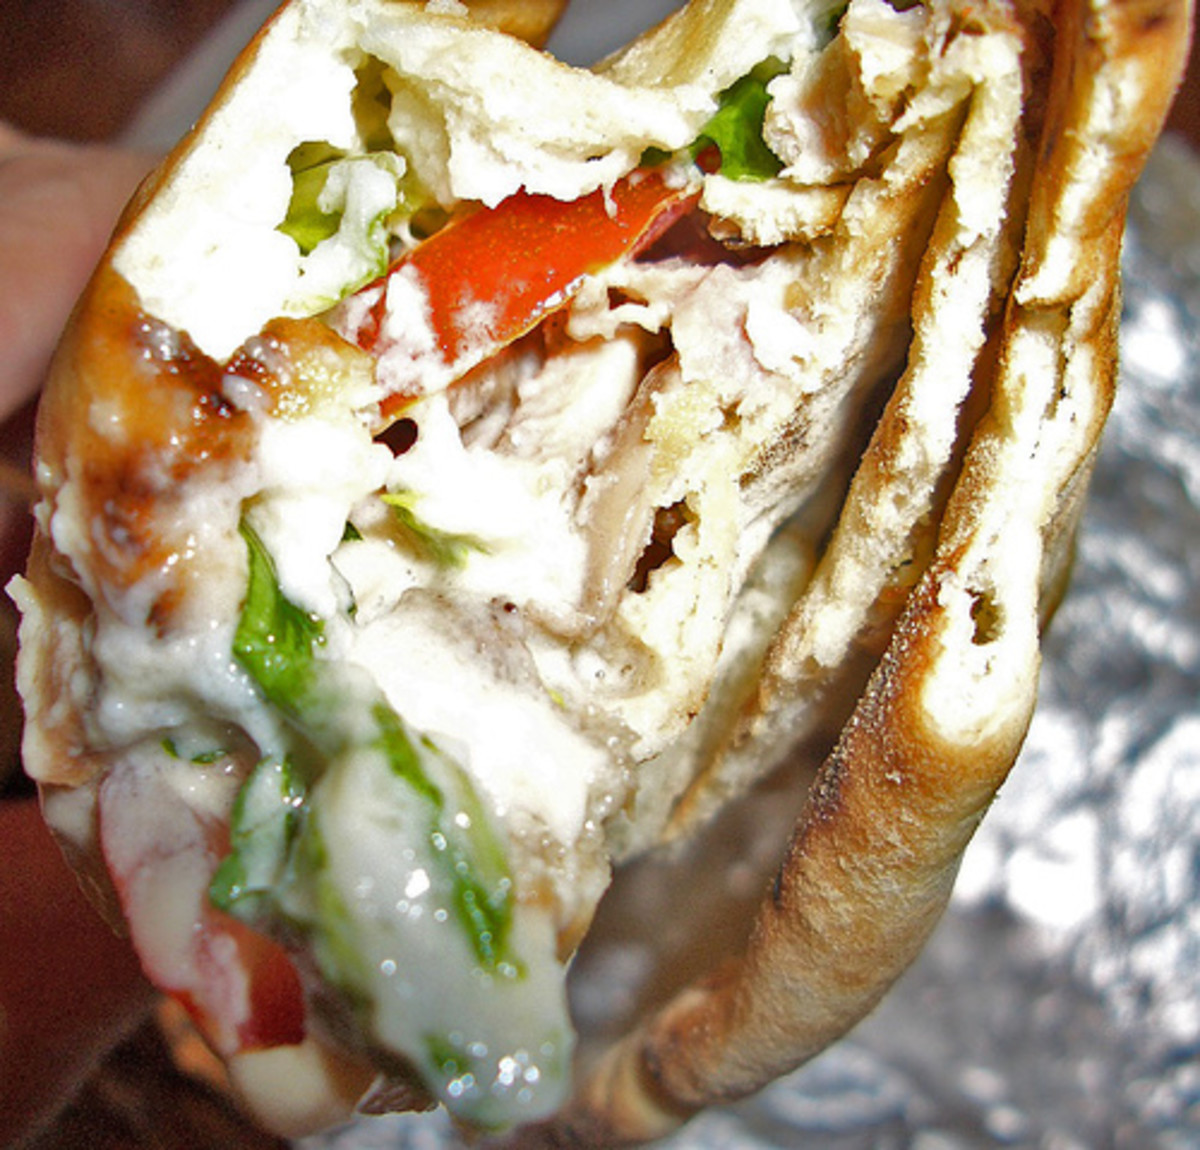 Chicken shawarma